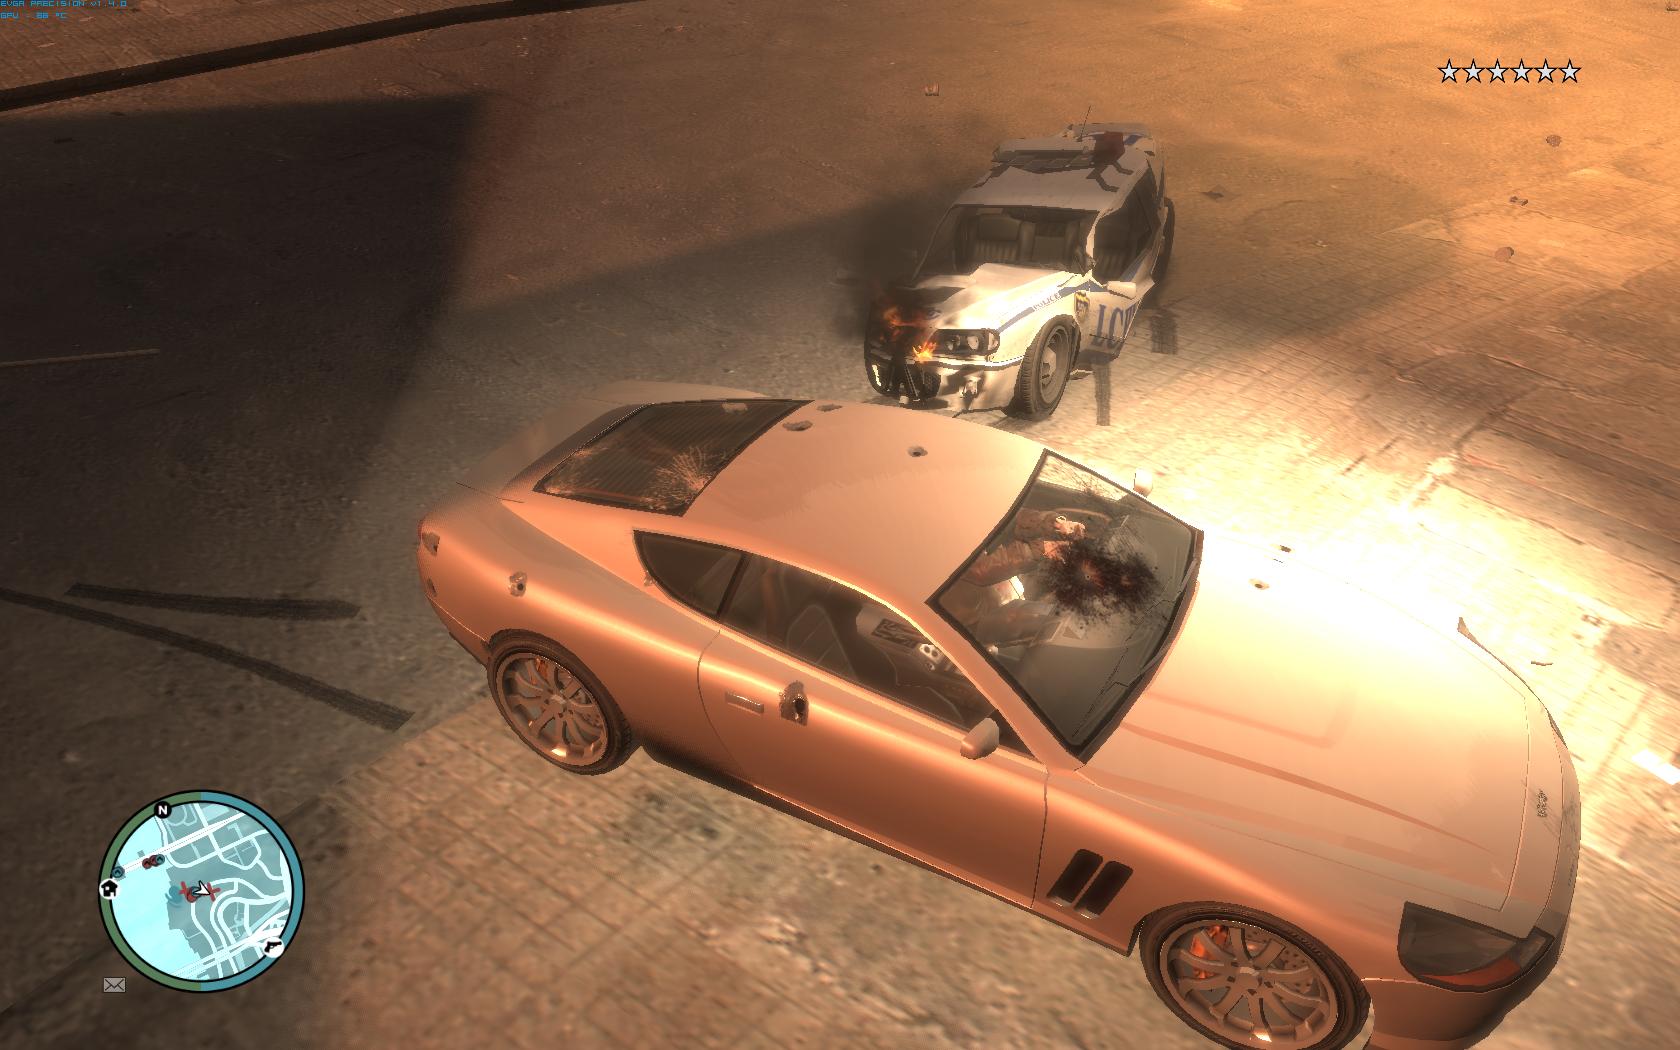 The GTA Place GTA IV Killer Cars Mod